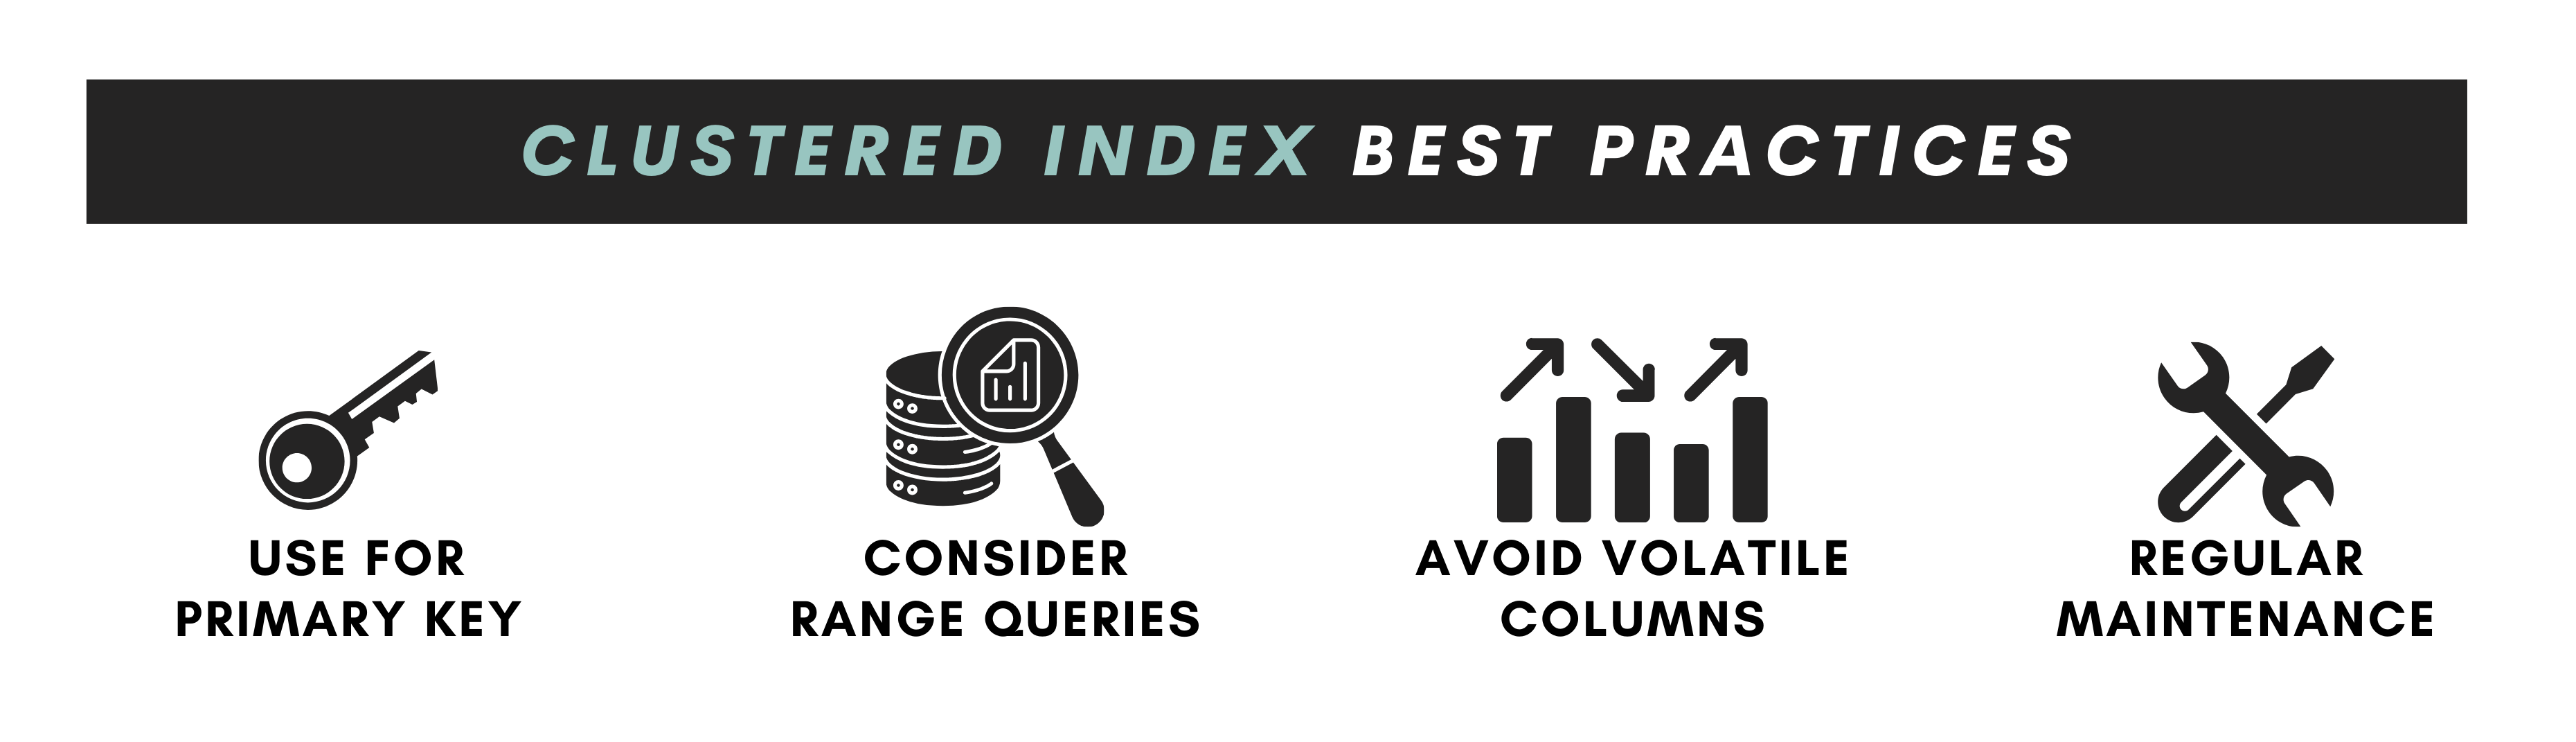 Clustered Index best practices